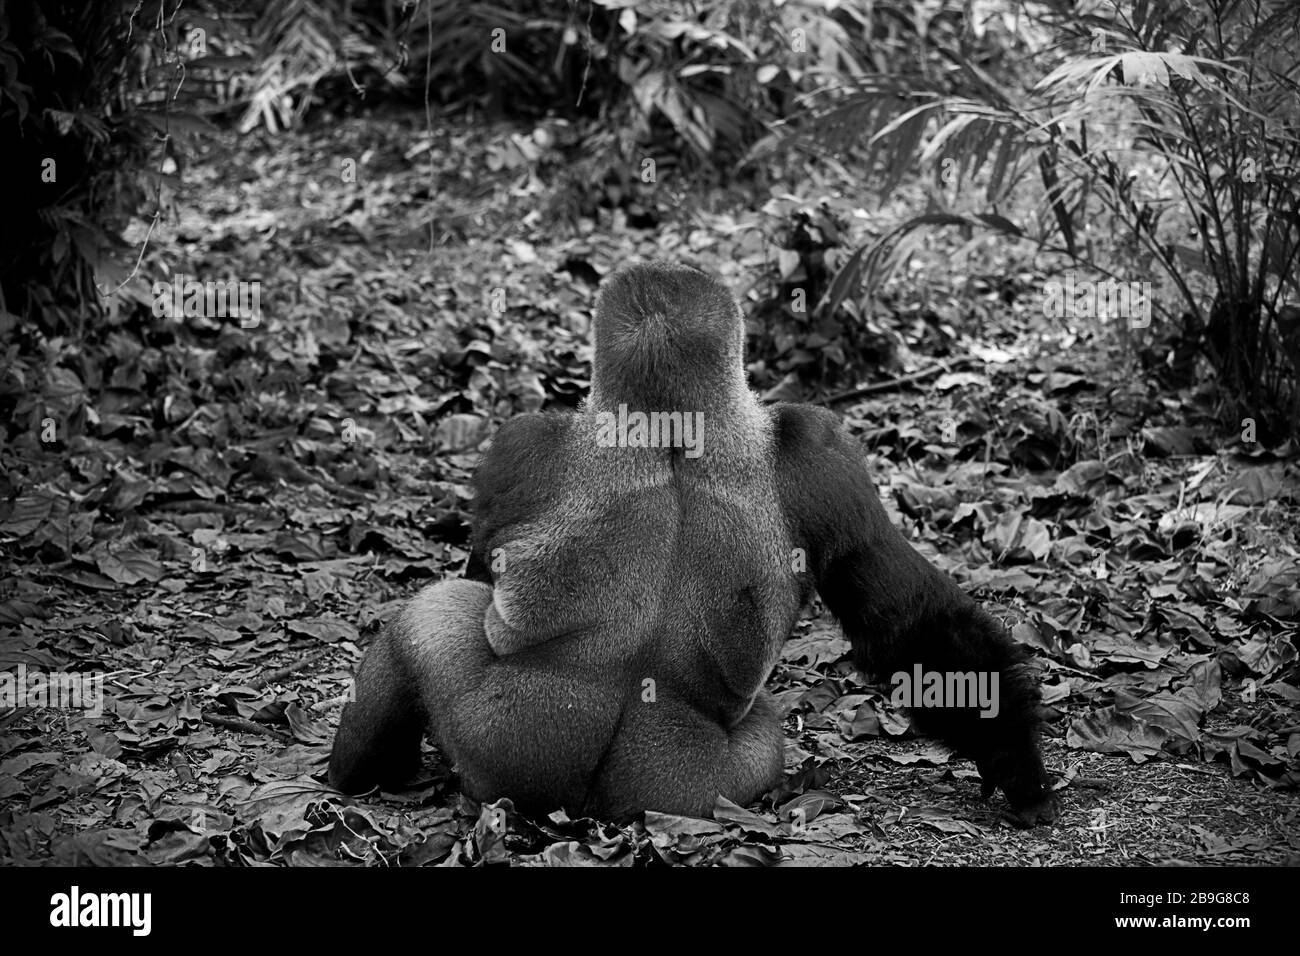 Gorilla hair Black and White Stock Photos & Images - Alamy